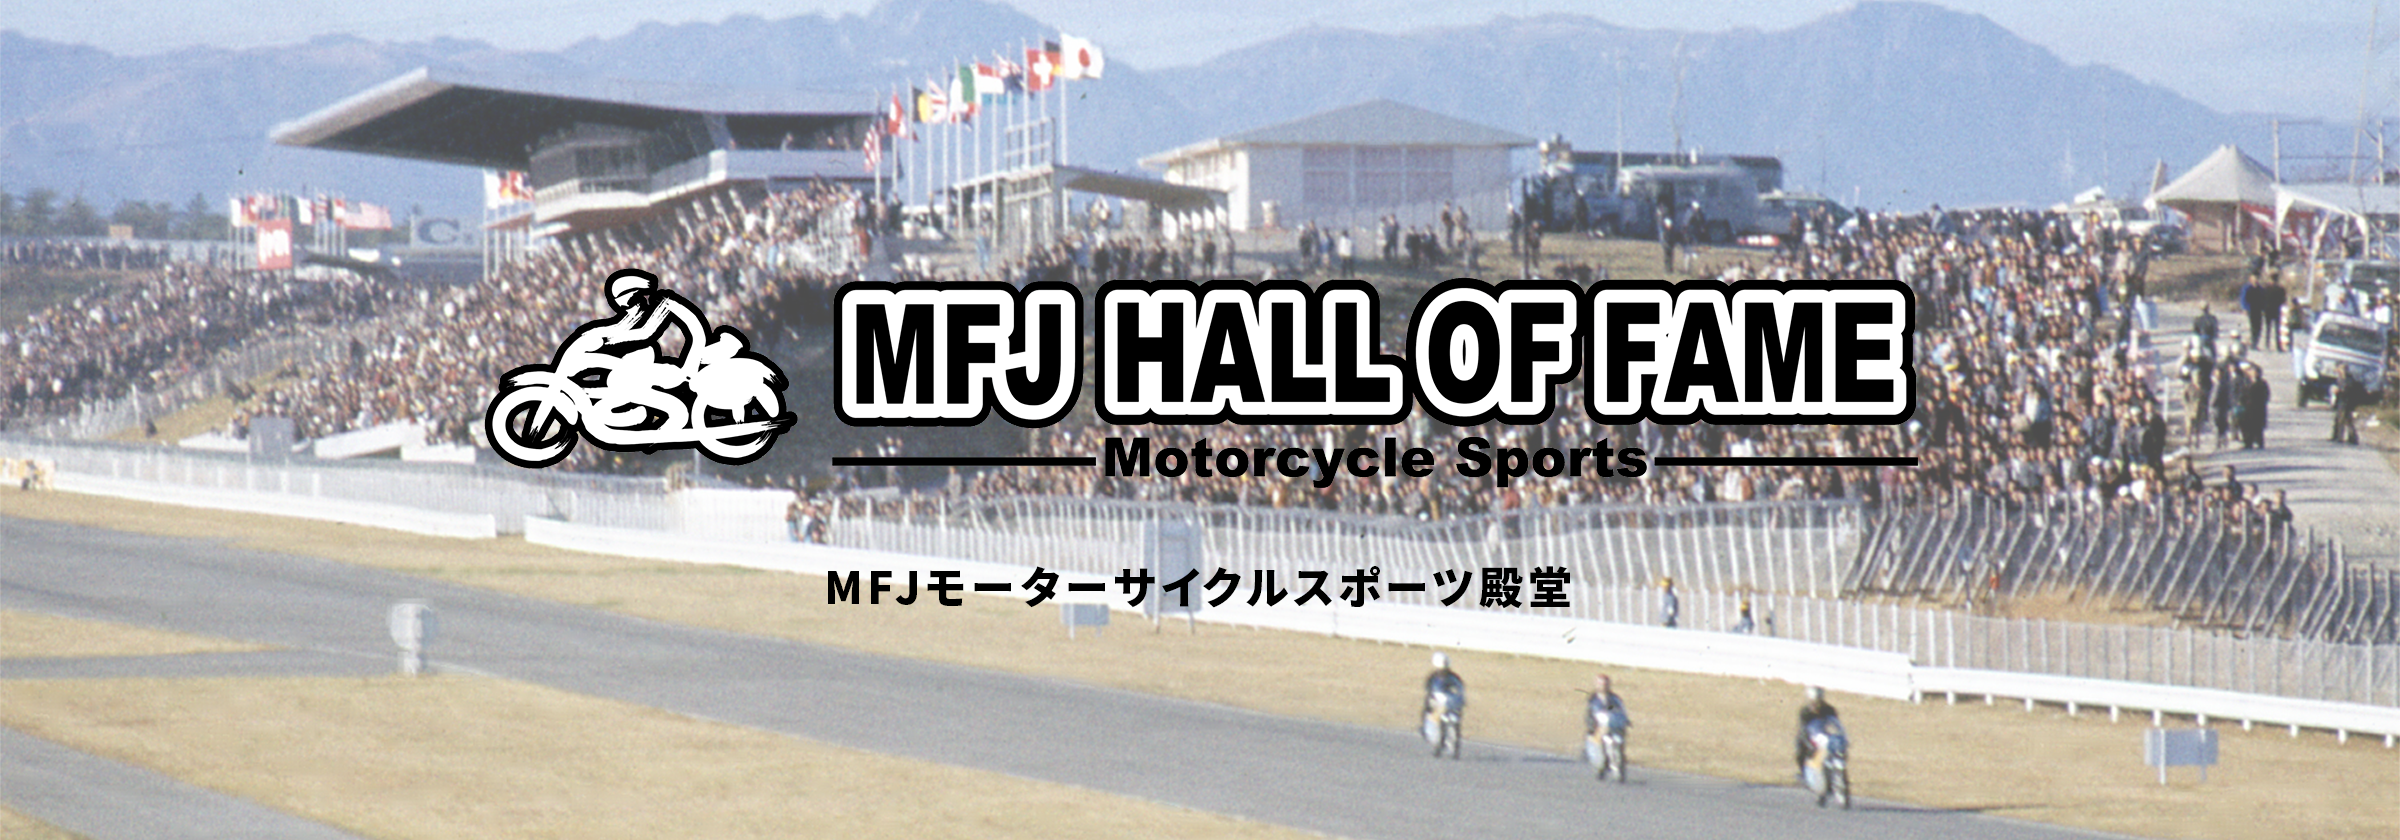 MFJ HALL OF FAME -Motorcycle Sports-　MFJモーターサイクルスポーツ殿堂